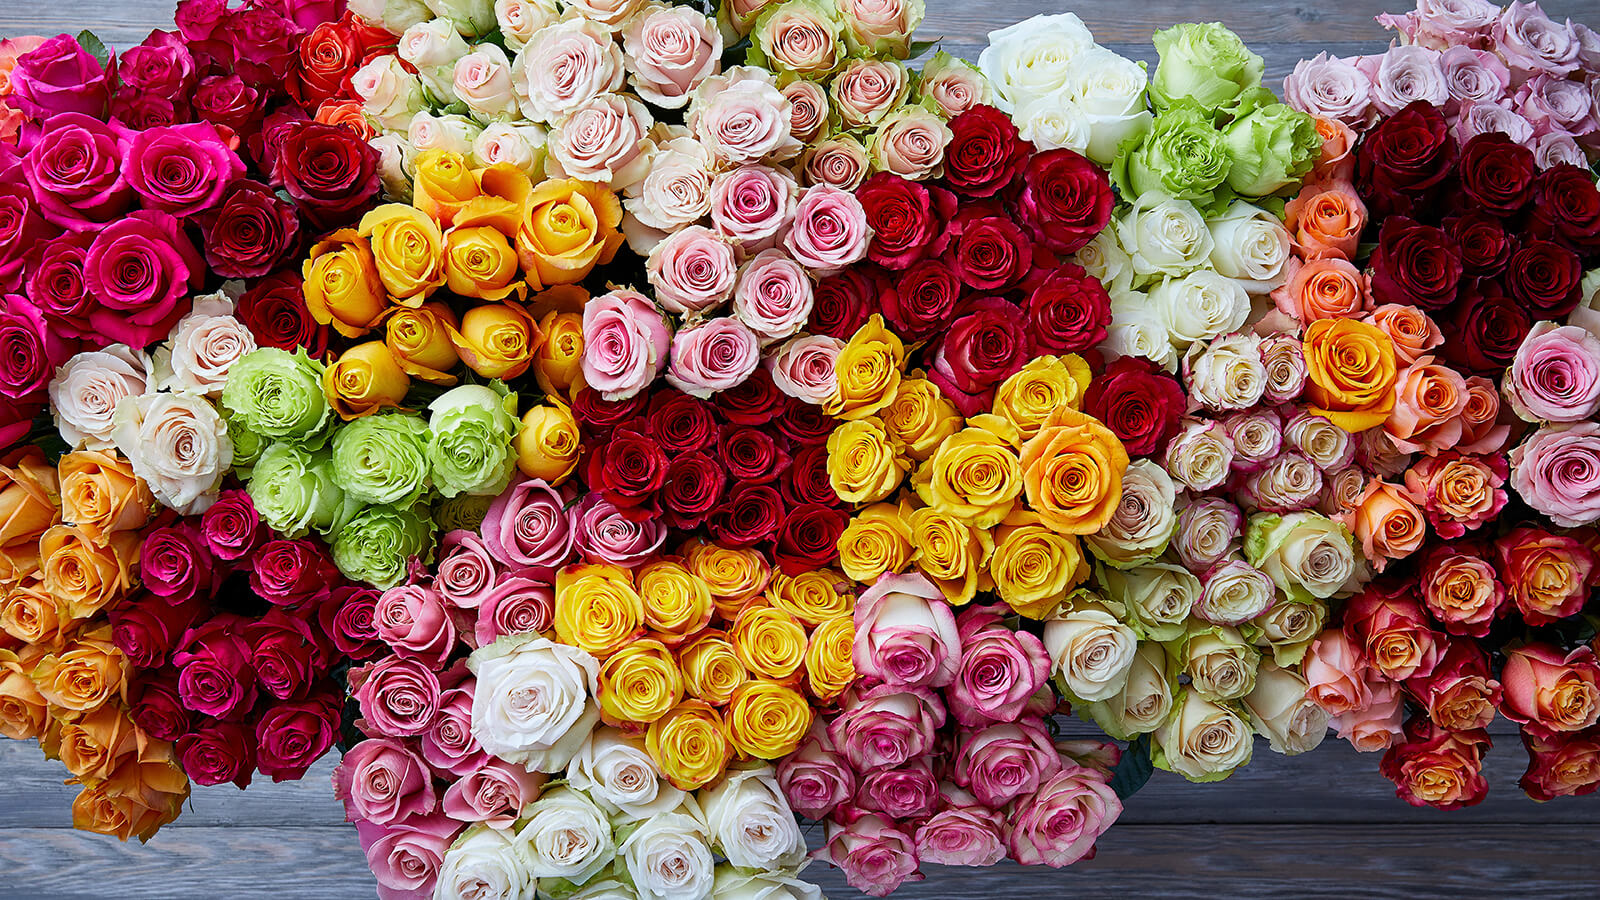 1-Dozen Multicolor Rose Bouquet - Flower Delivery NYC 